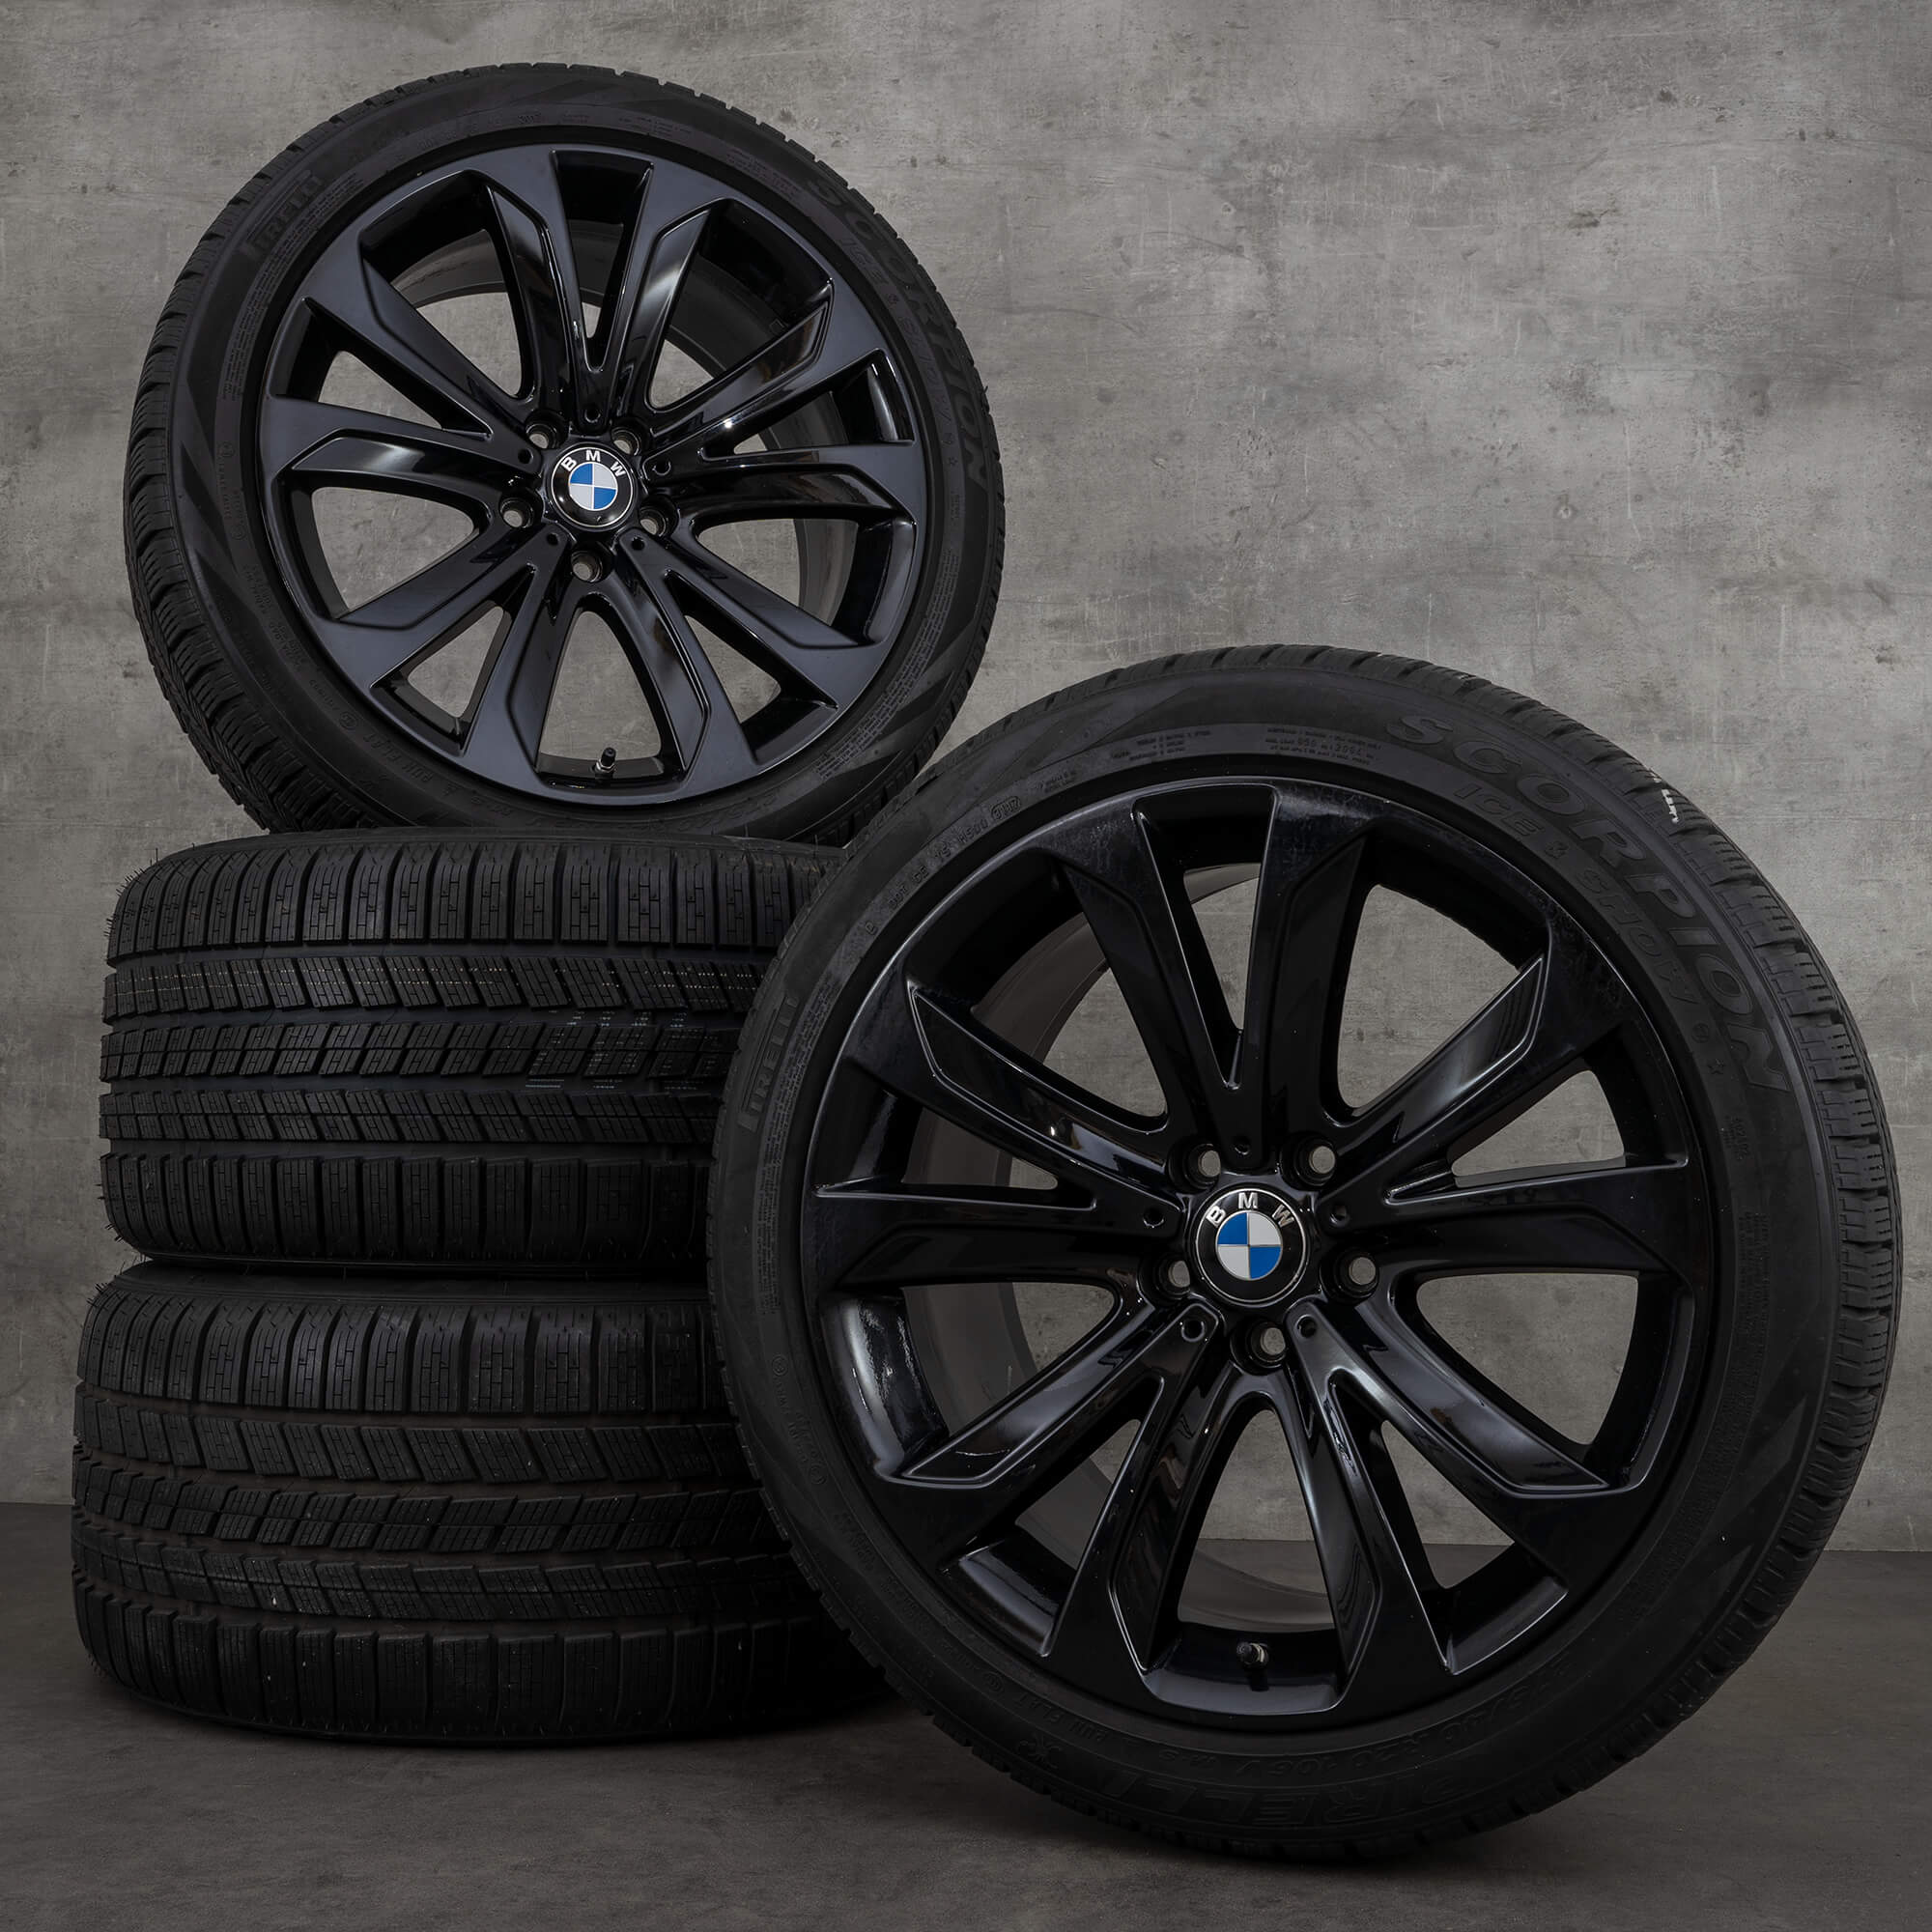 BMW X5 E70 F15 X6 F16 20 inch rims winter tires winter wheels Styling 491